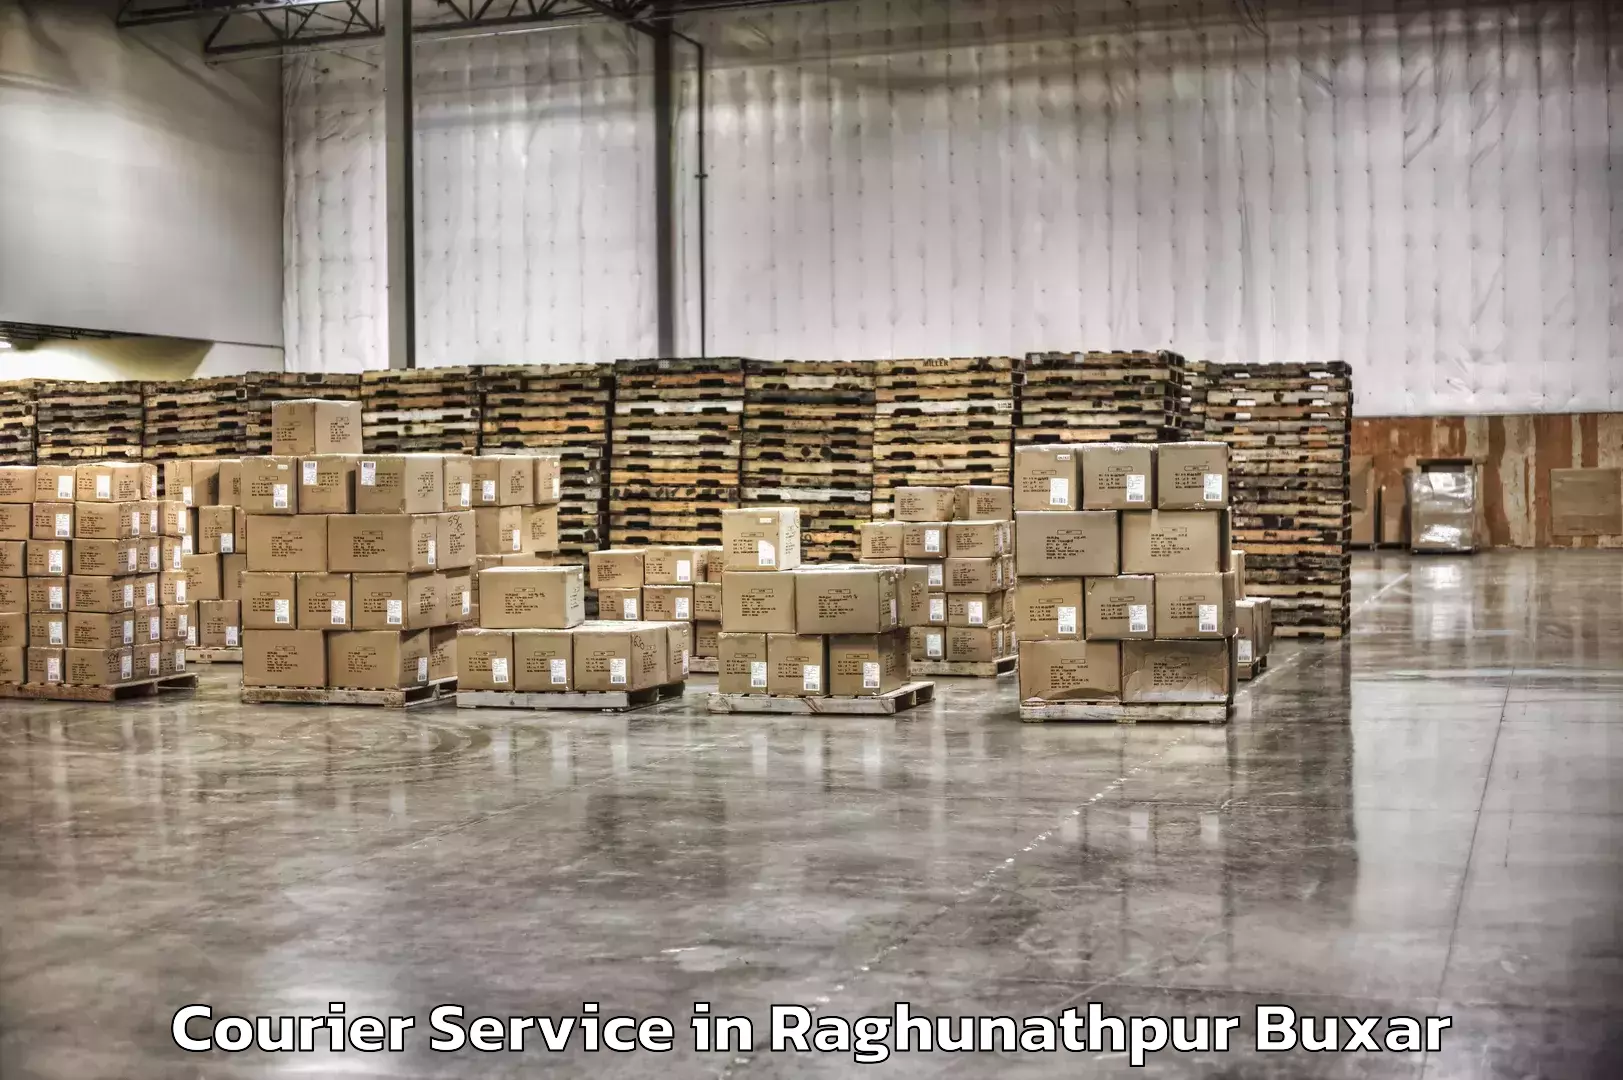 Digital shipping tools in Raghunathpur Buxar